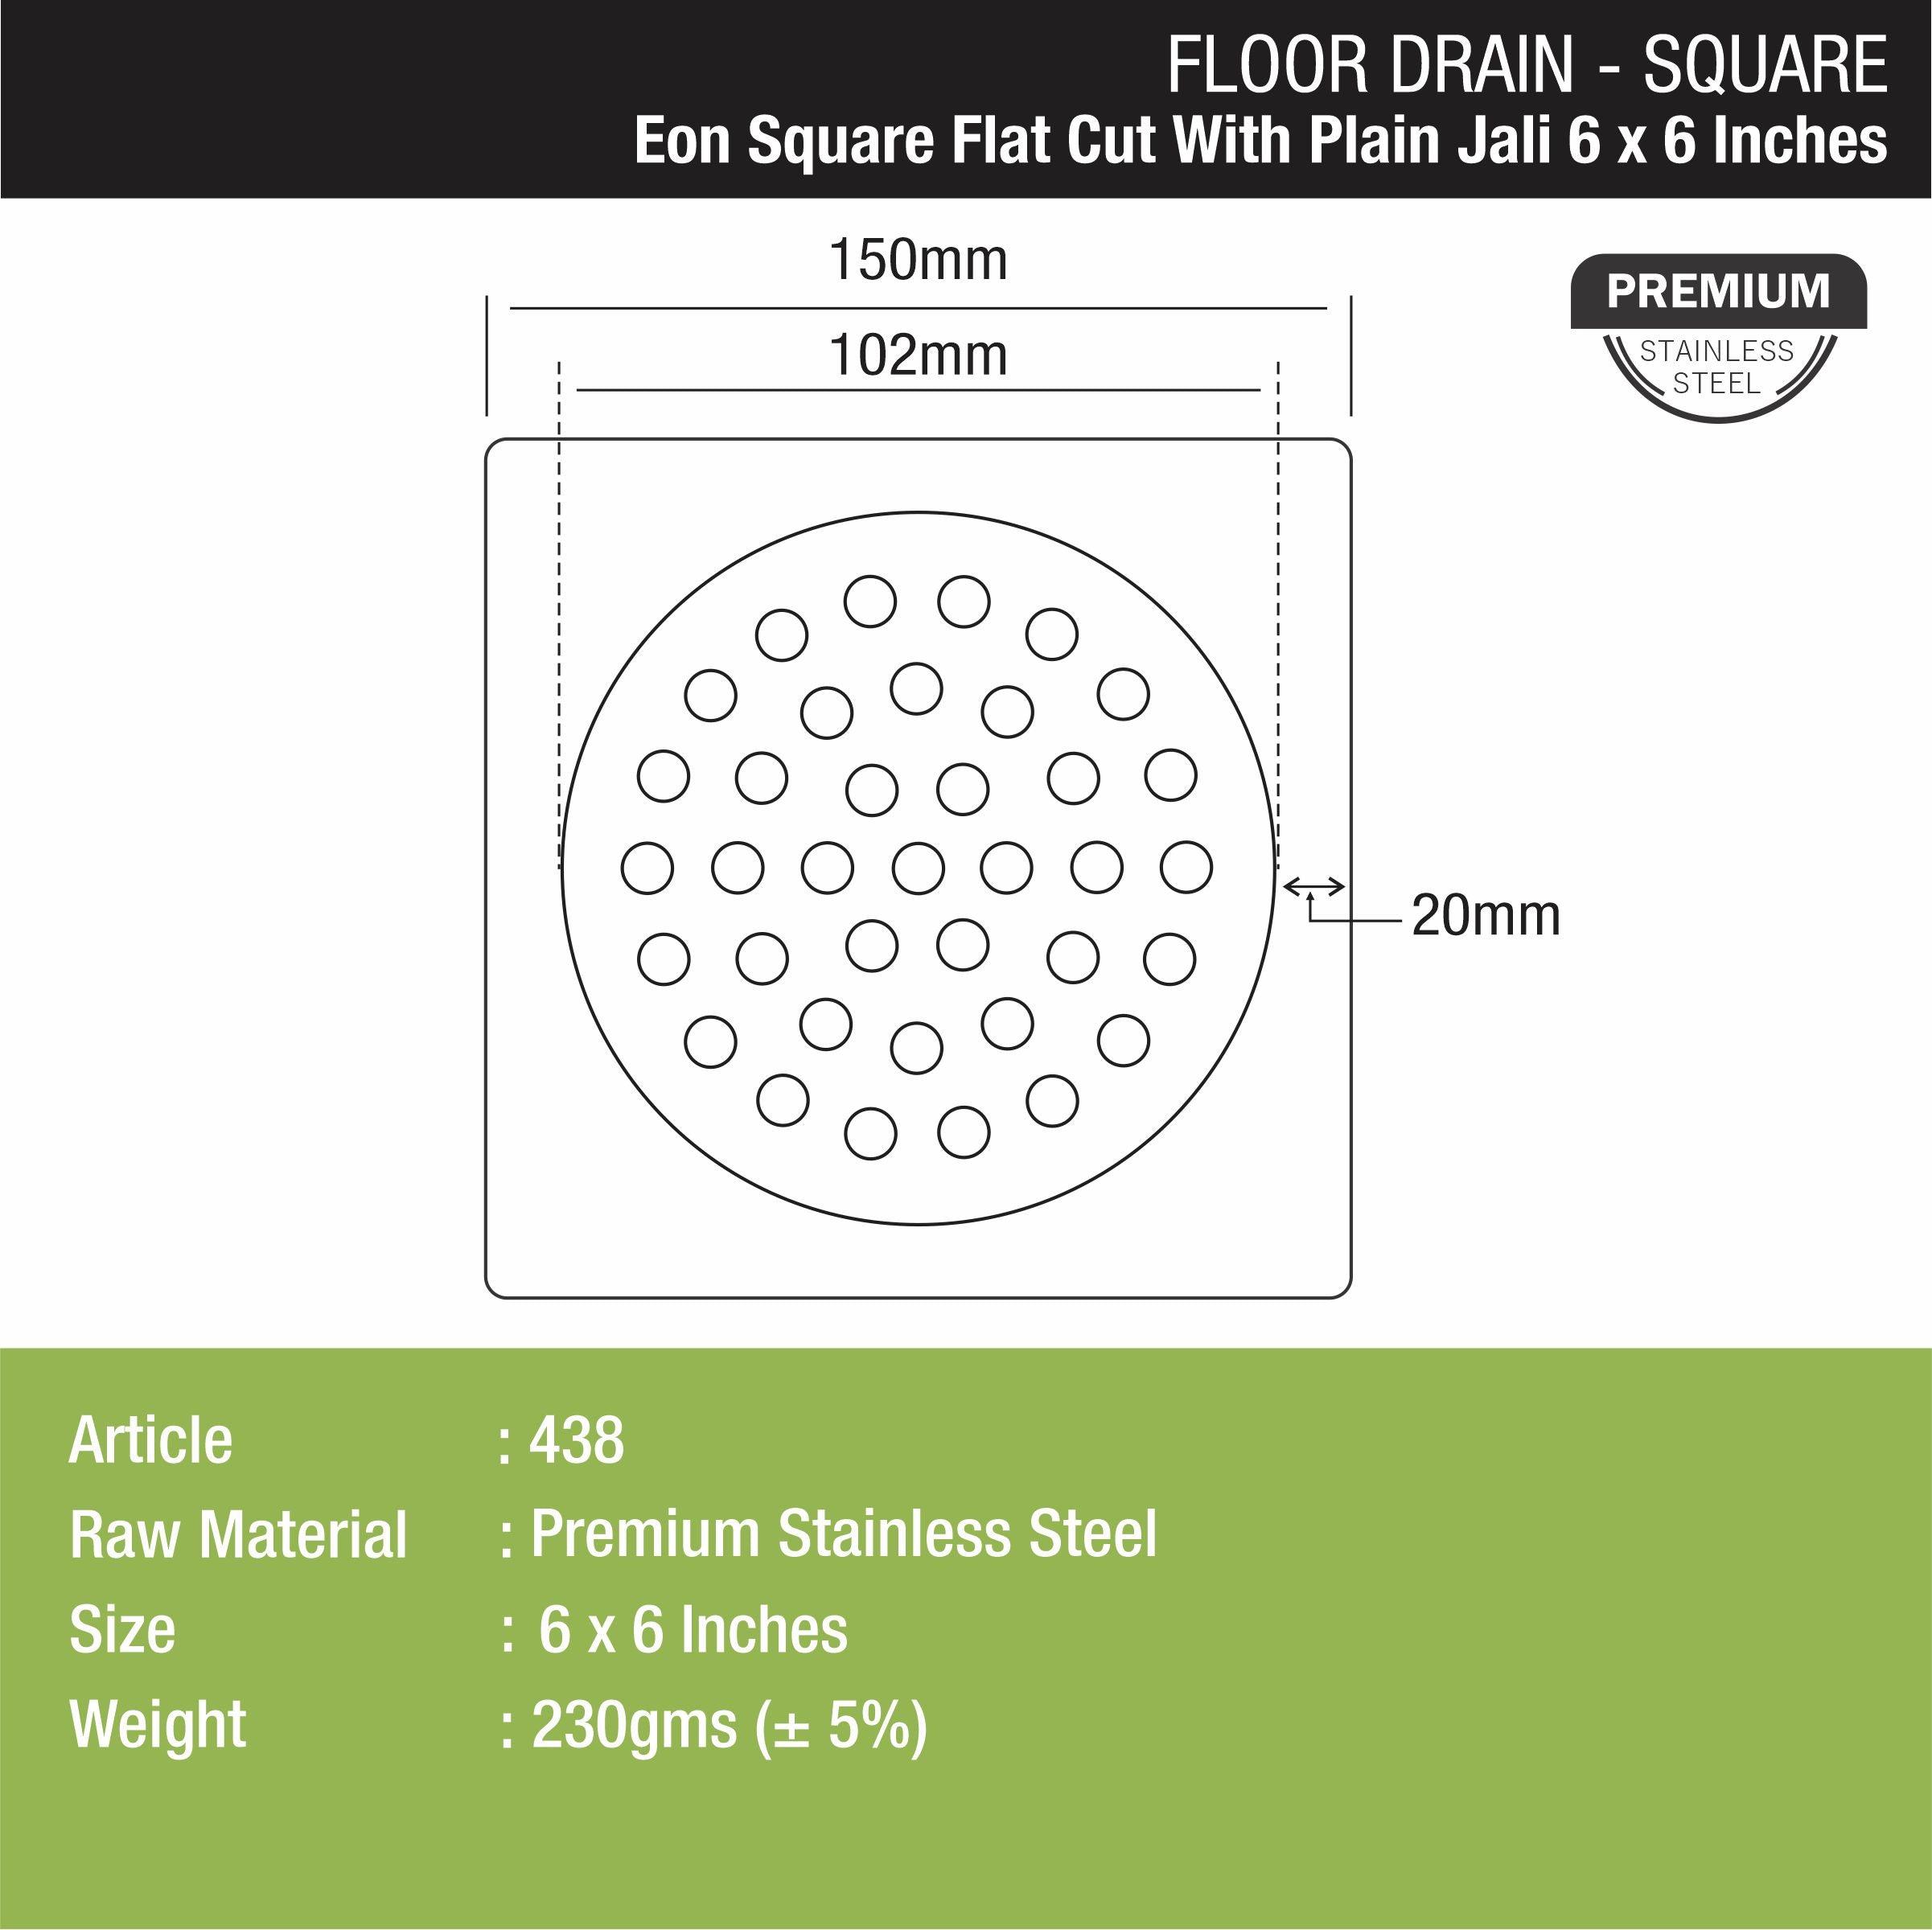 Eon Square Flat Cut Floor Drain with Plain Jali (6 x 6 Inches) - LIPKA - Lipka Home